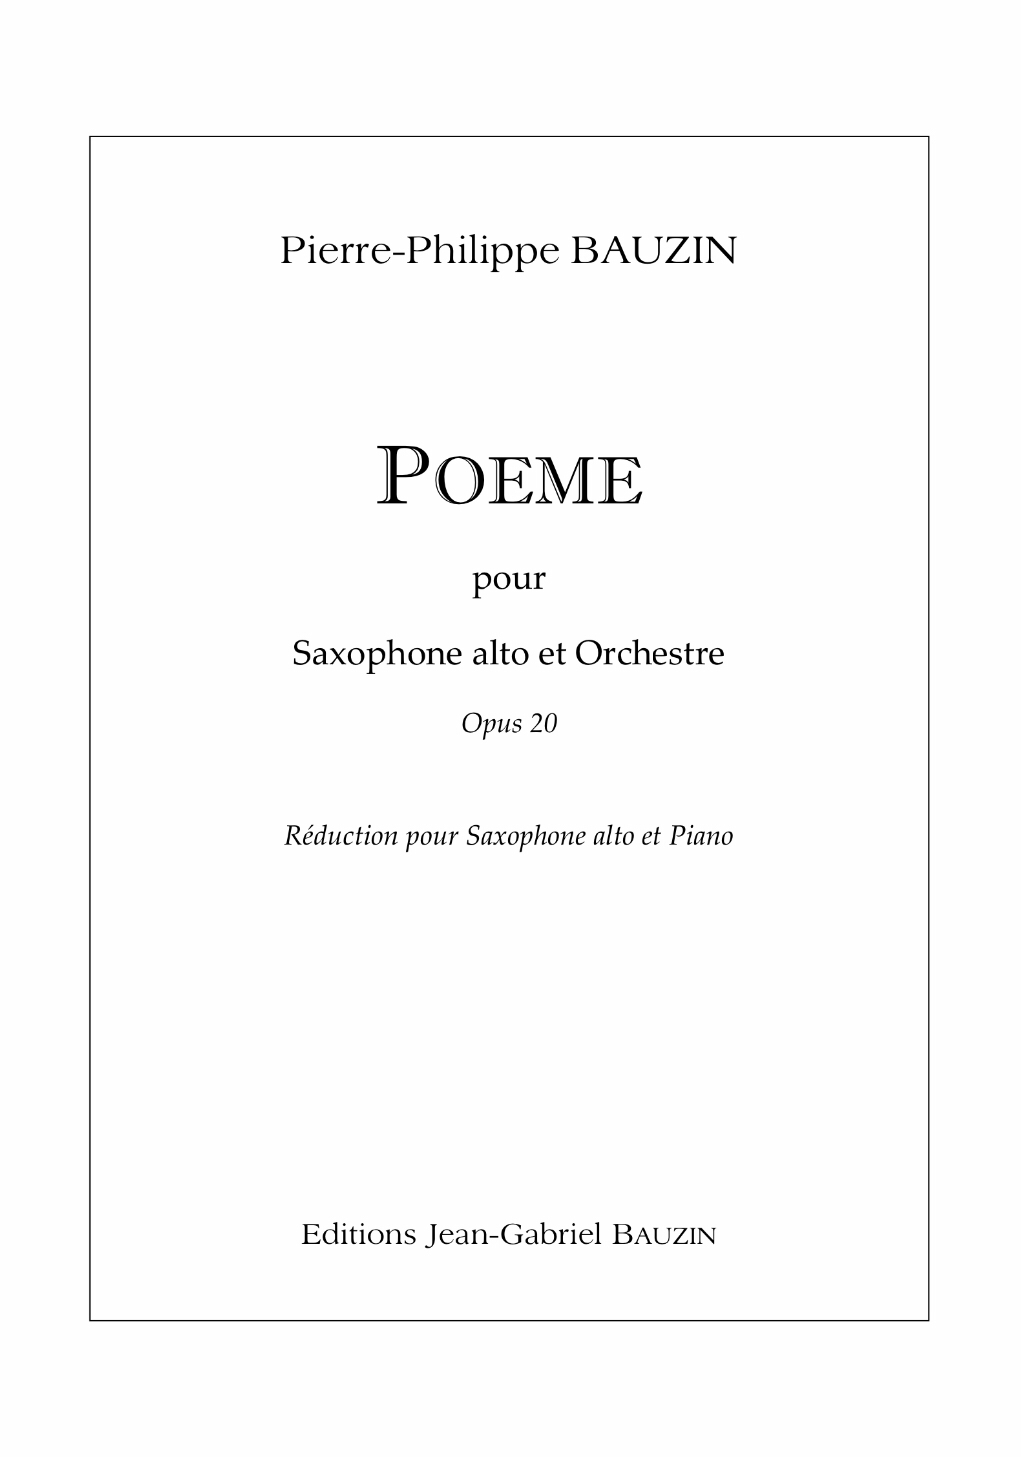 Poem by Pierre-Philippe Bauzin